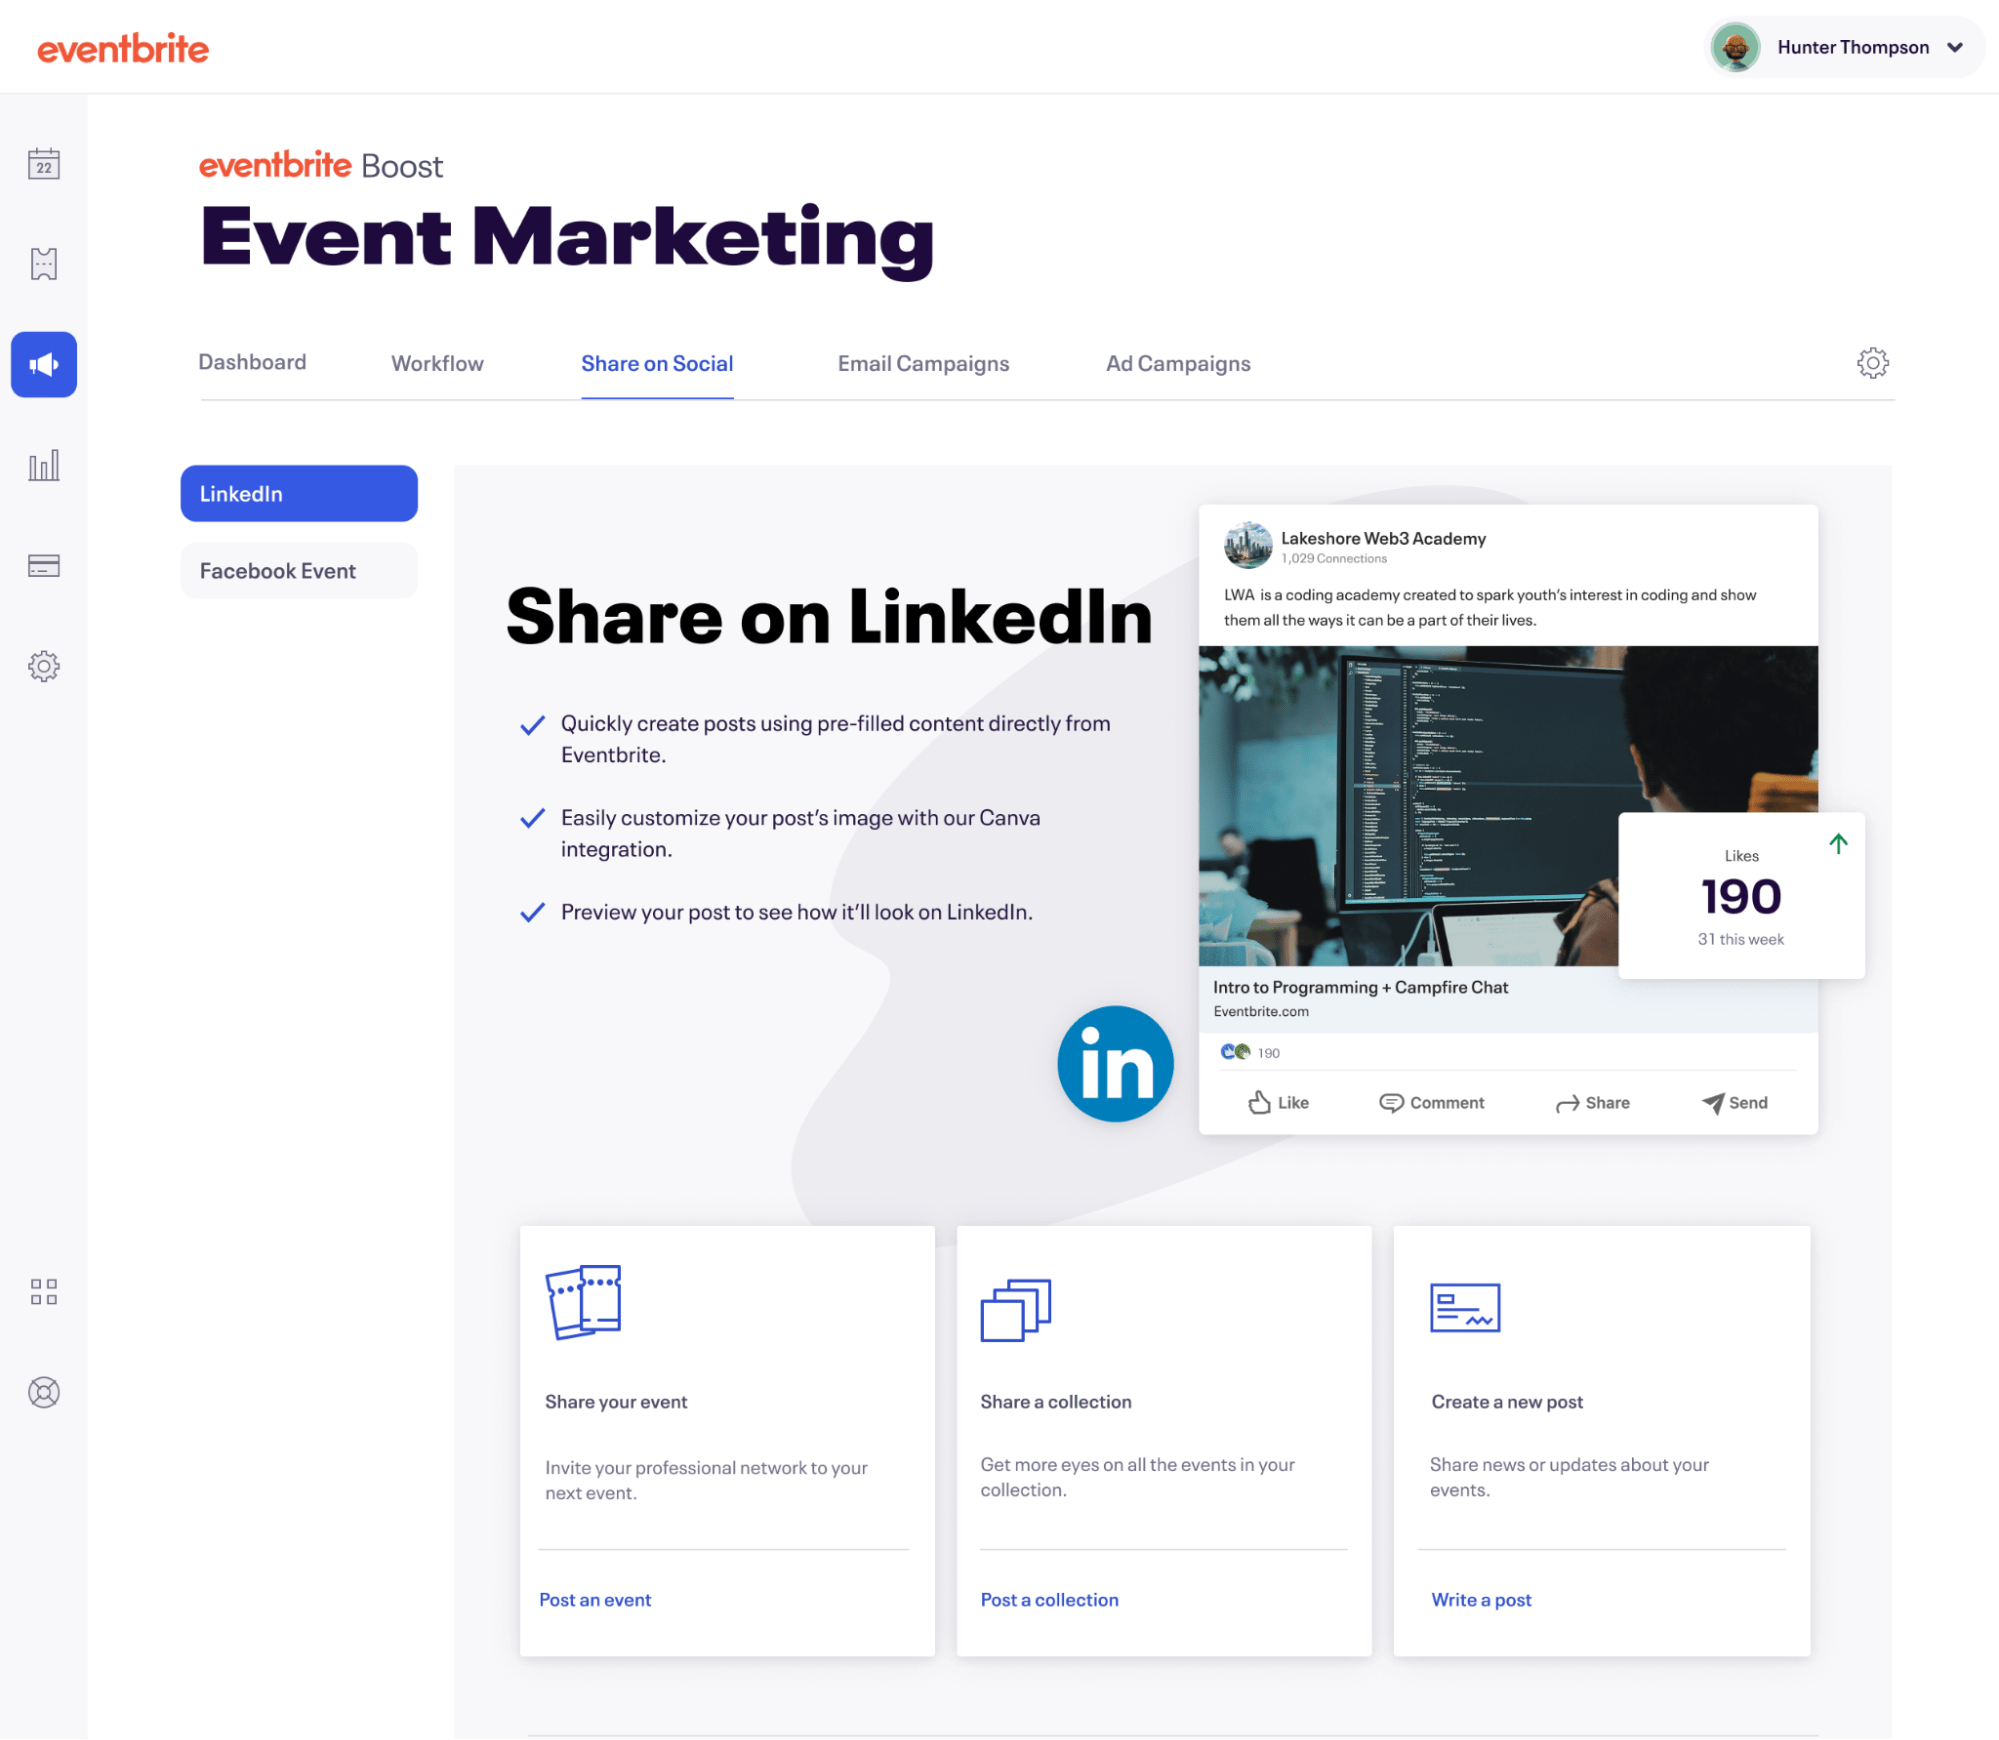 Eventbrite Boost's Share on LinkedIn interface